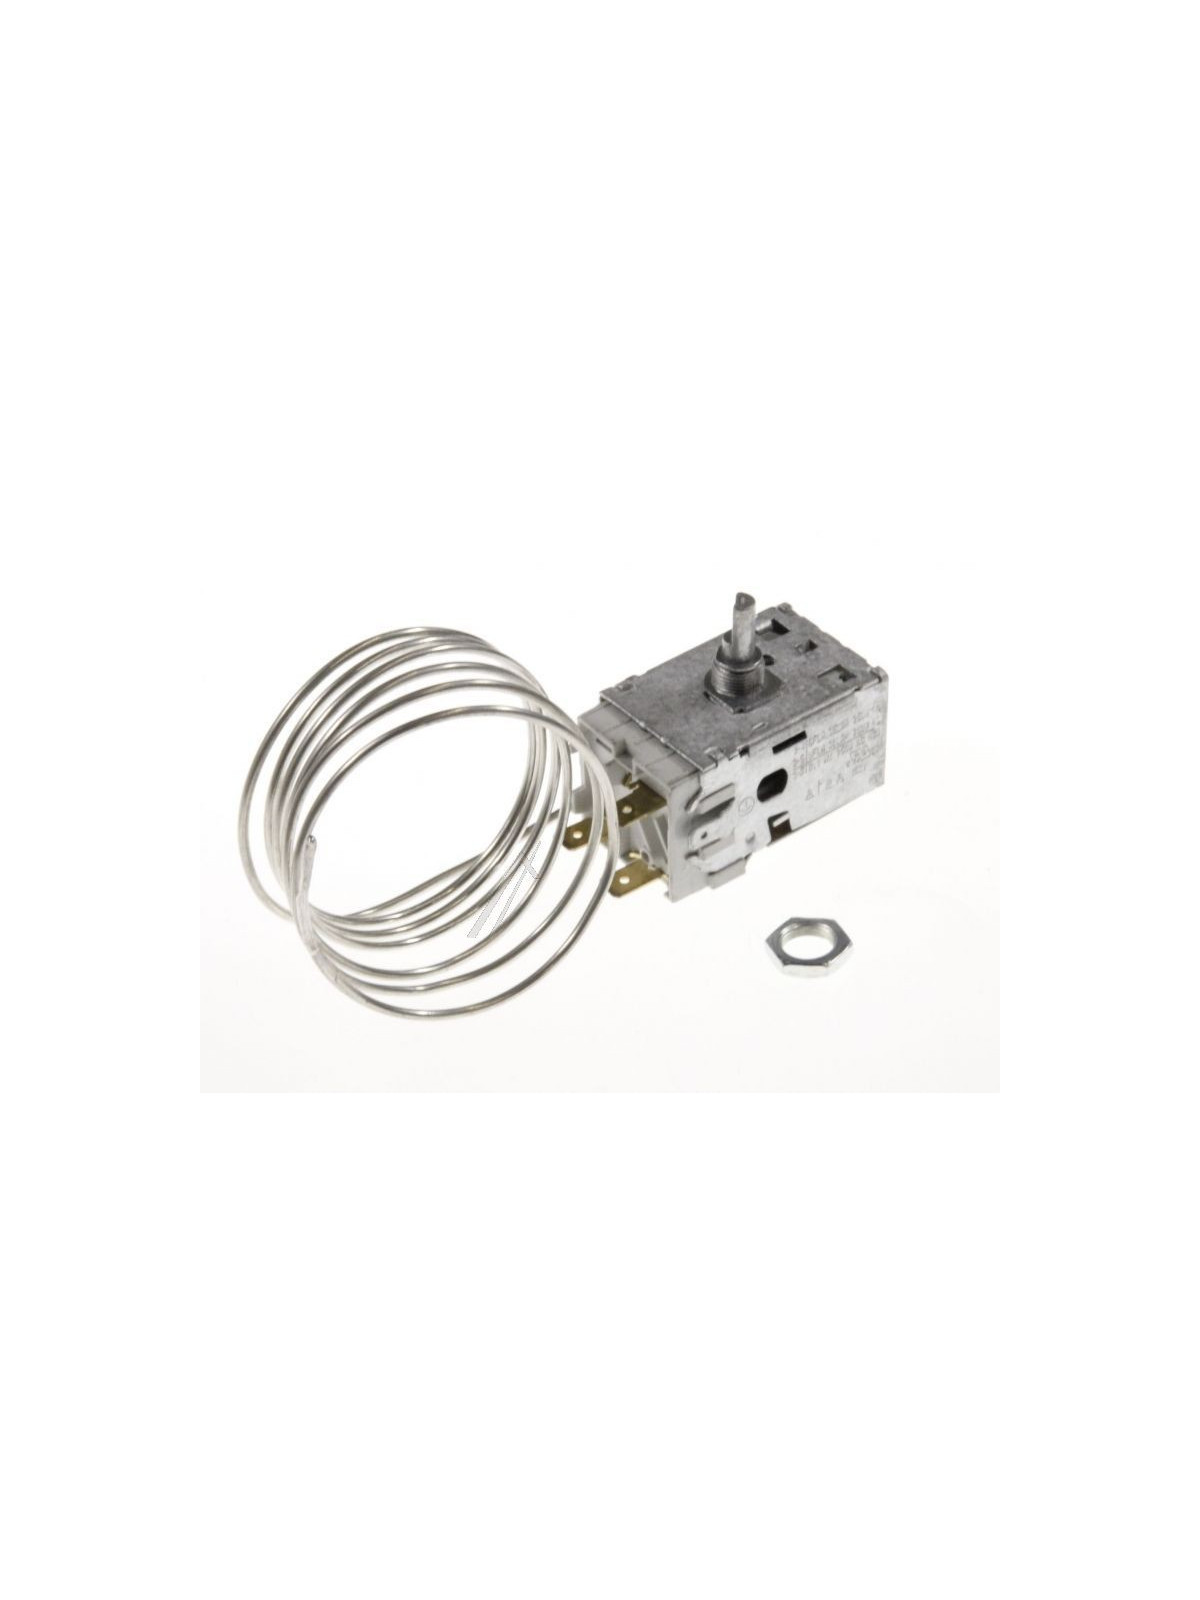 Thermostat Whirlpool WHM4611 - Congélateur 